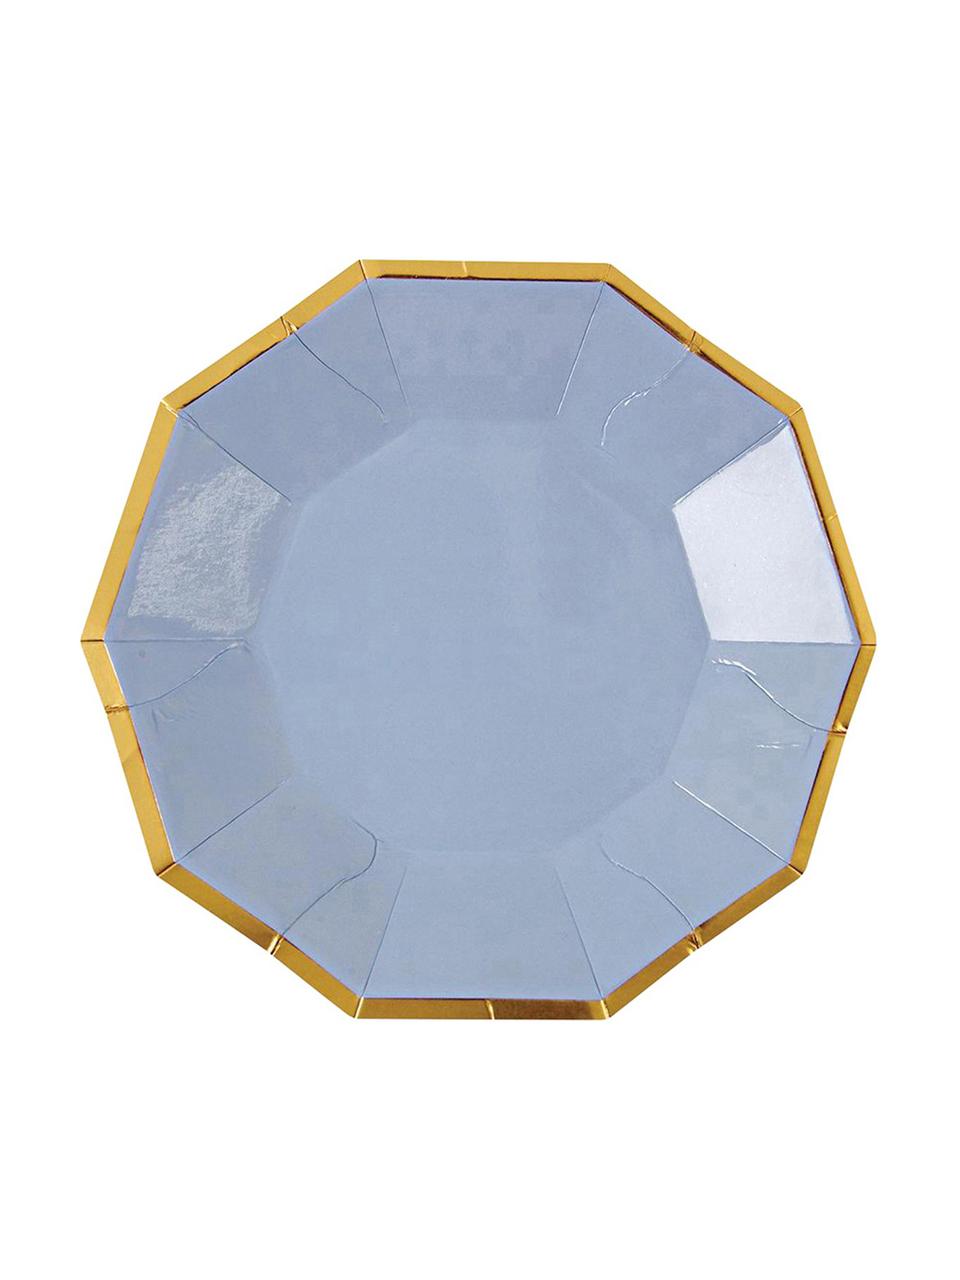 Papp-Teller Bloom, 16 Stück, Papier, beschichtet, Hellblau, Goldfarben, 11 x 11 cm